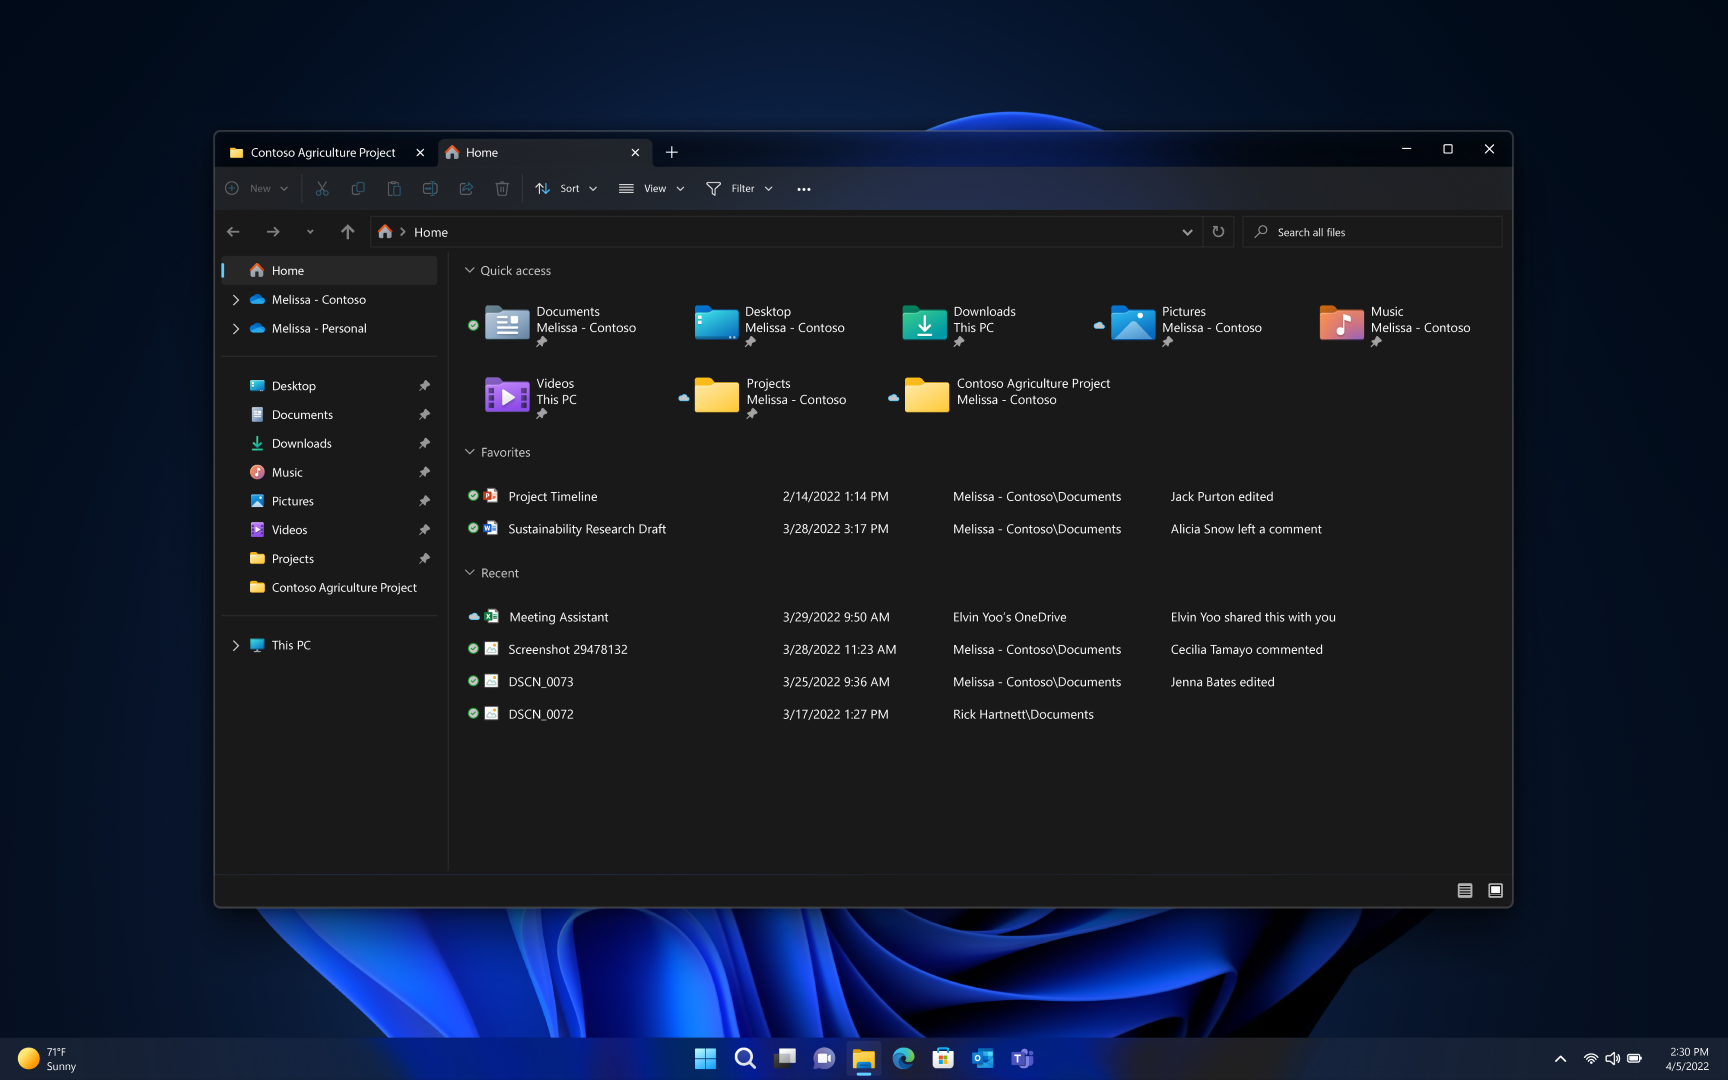 Windows 11 2022 Update File Explorer